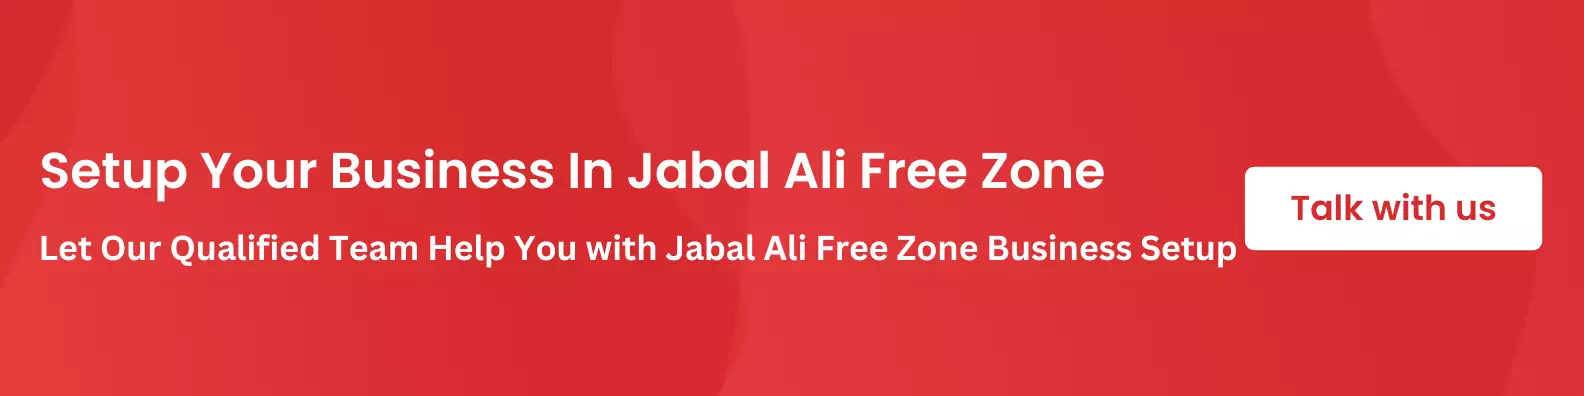 jabal-ali-free-zone